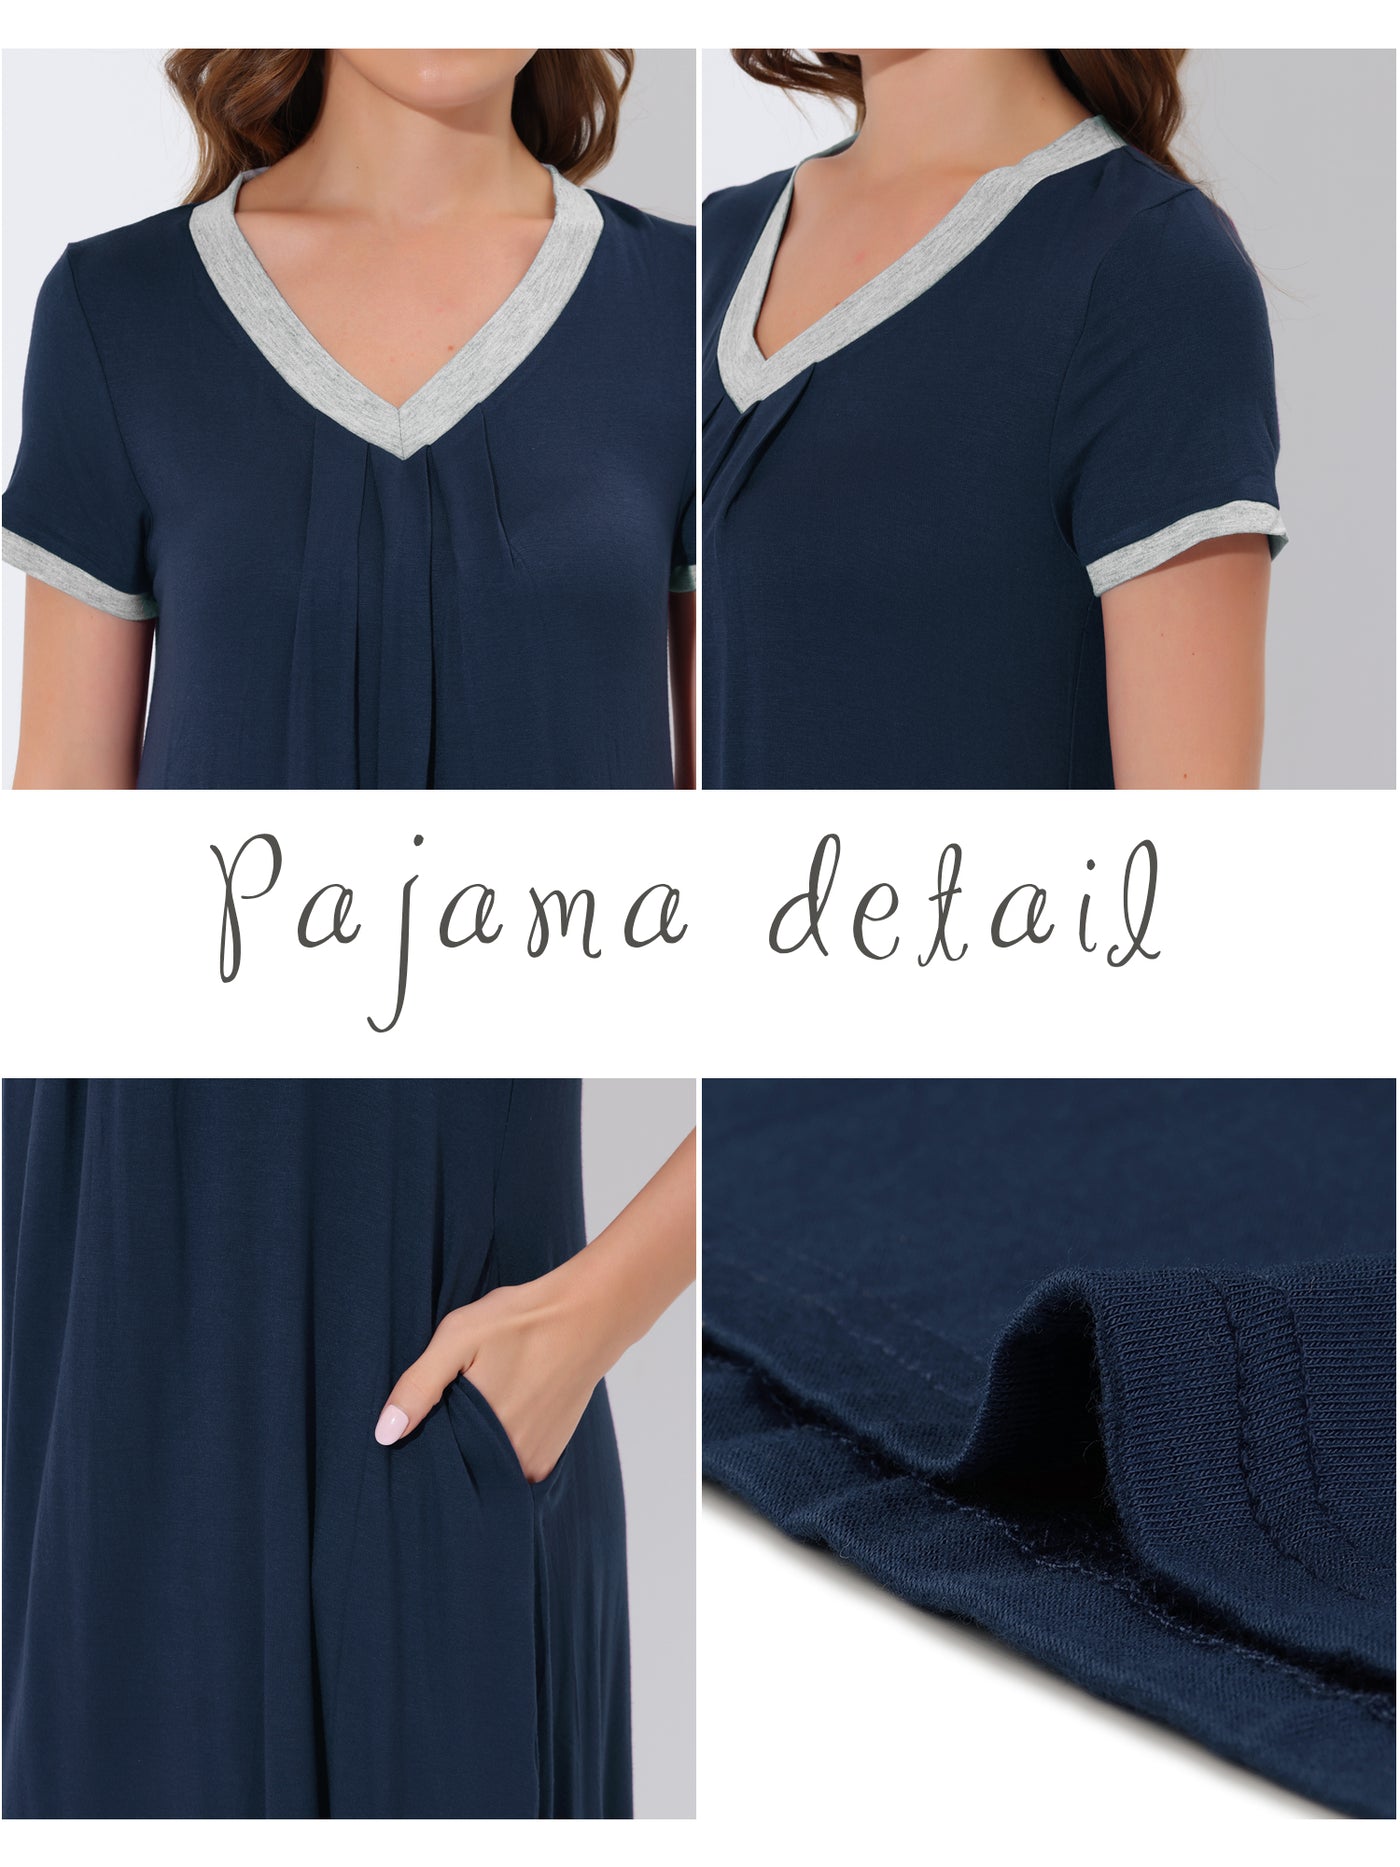 Bublédon Women's Pajama Dress Nightshirt Sleepwear V-Neck with Pockets Lounge Nightgown